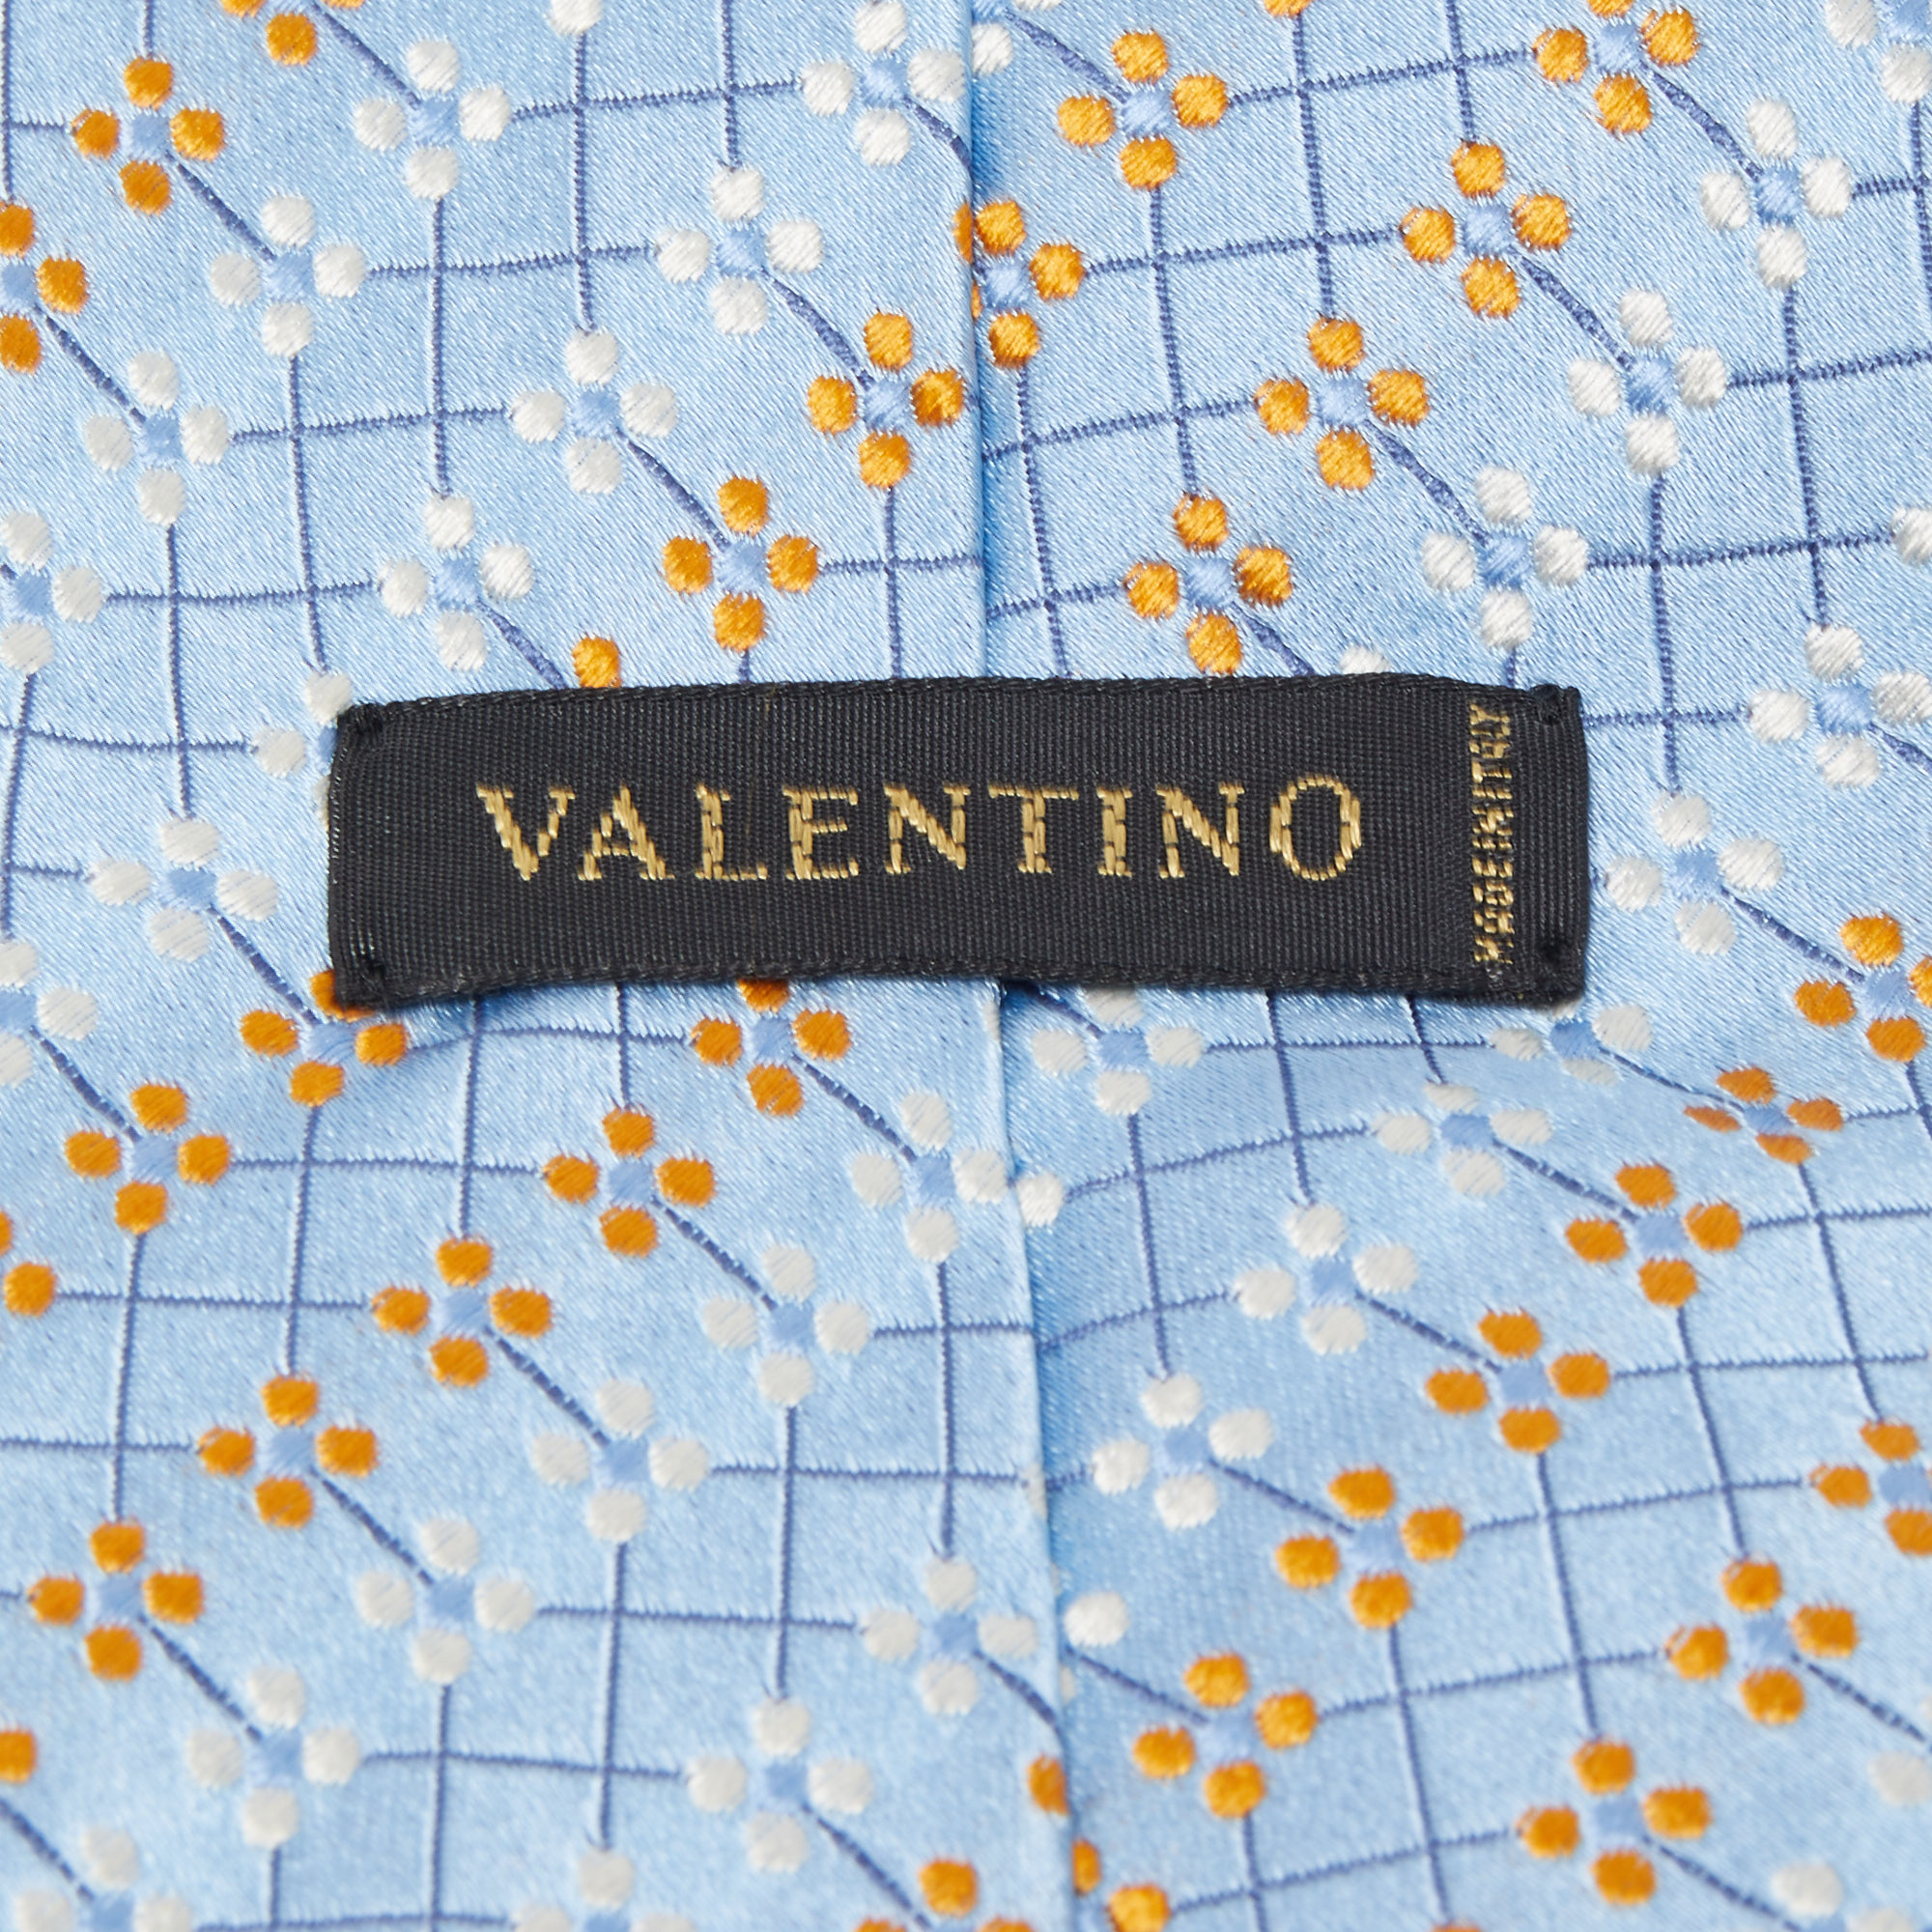 Valentino Blue Dot Pattern Silk Traditional Tie